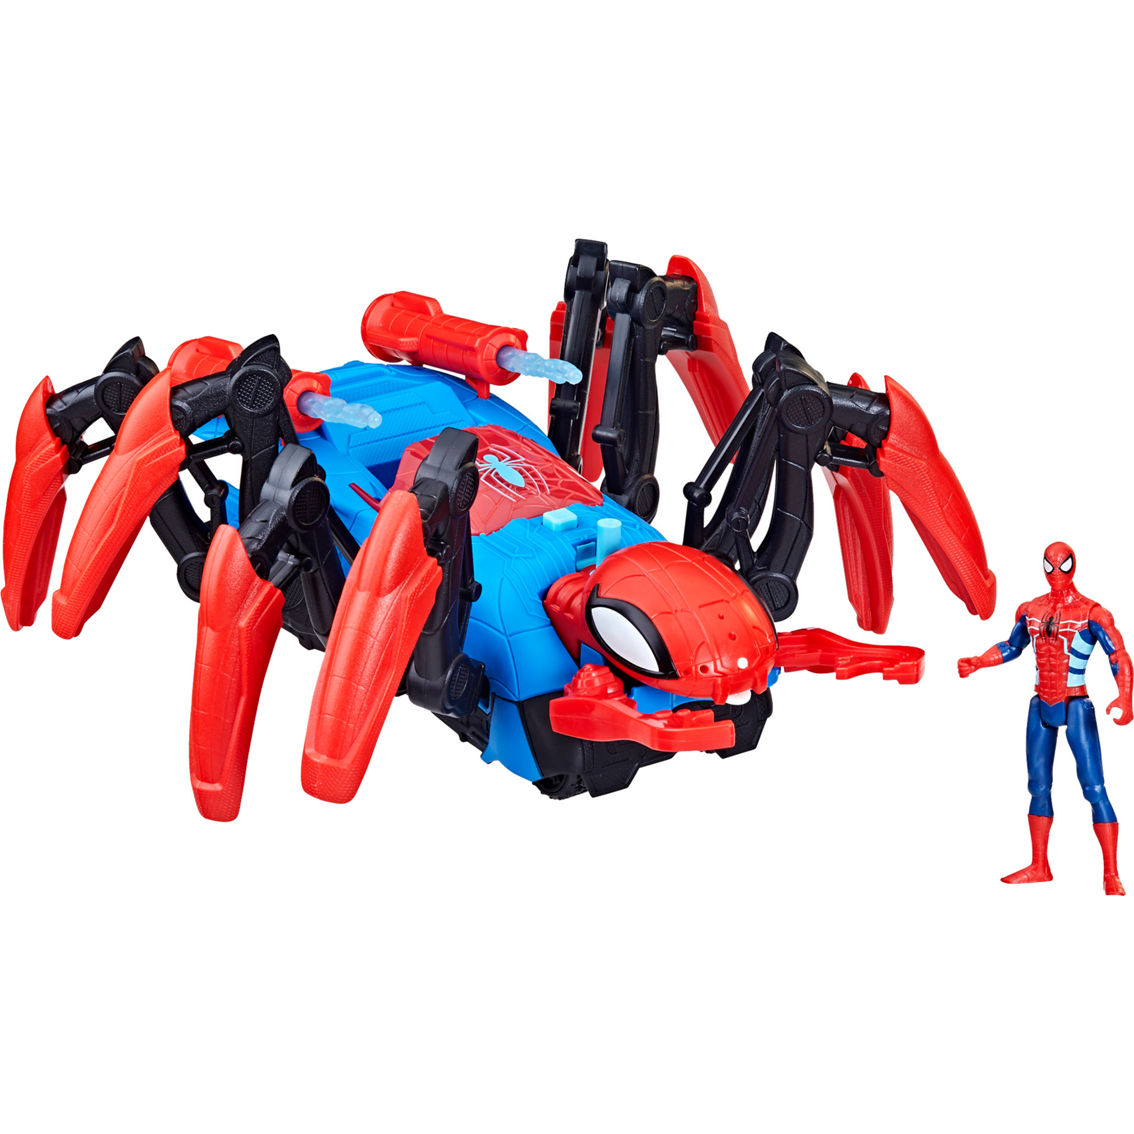 Marvel Spider-Man Crawl 'N Blast Spider Toy - Image 2 of 5